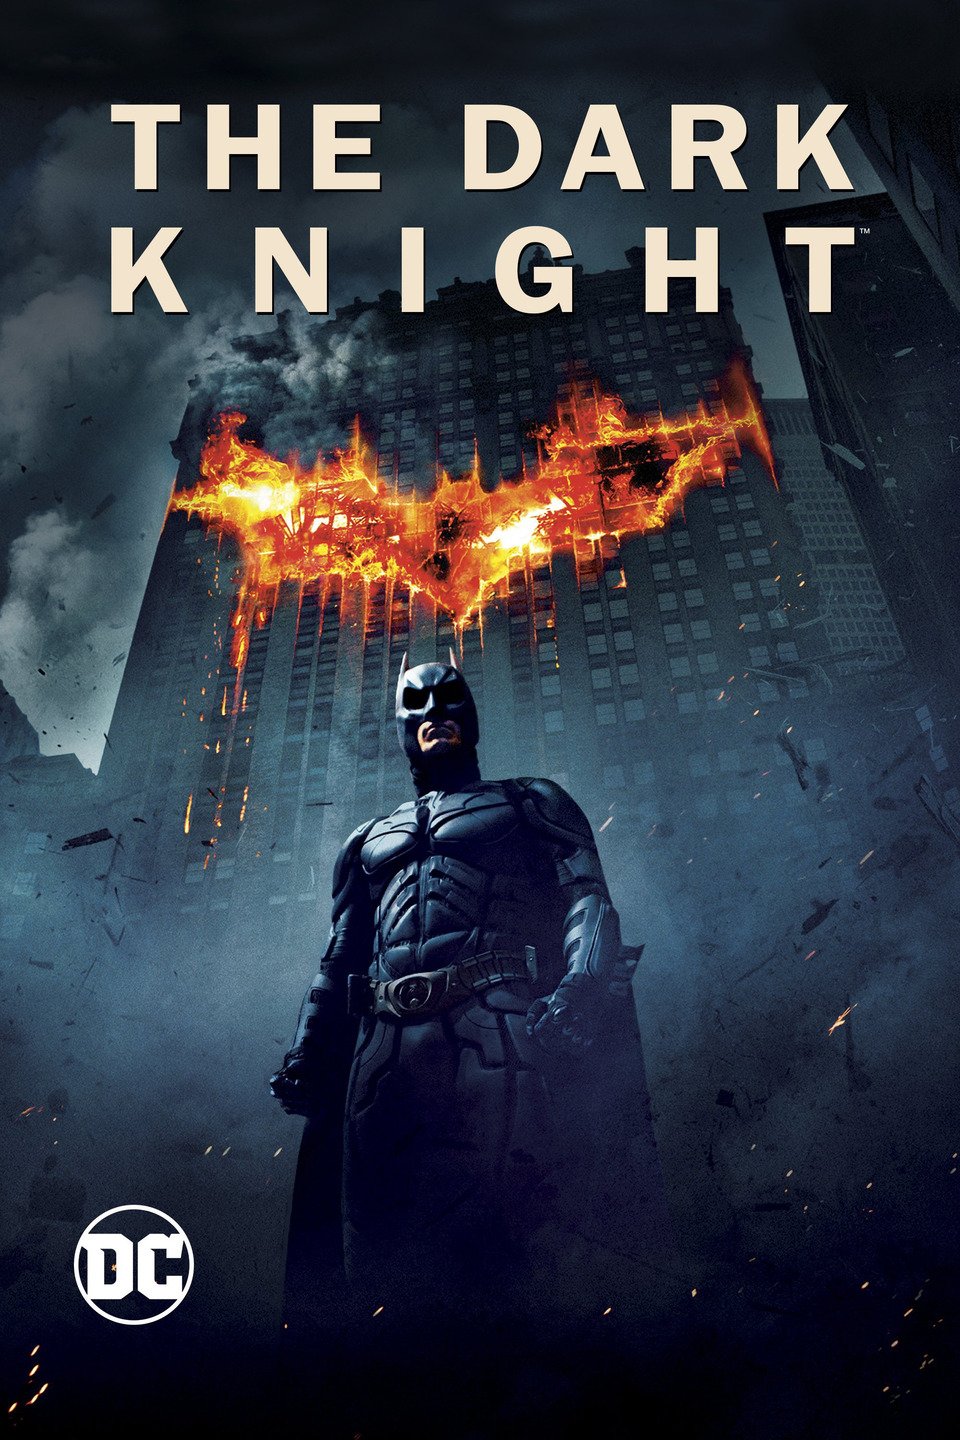 The Dark Knight (2008) | Soundeffects Wiki | Fandom